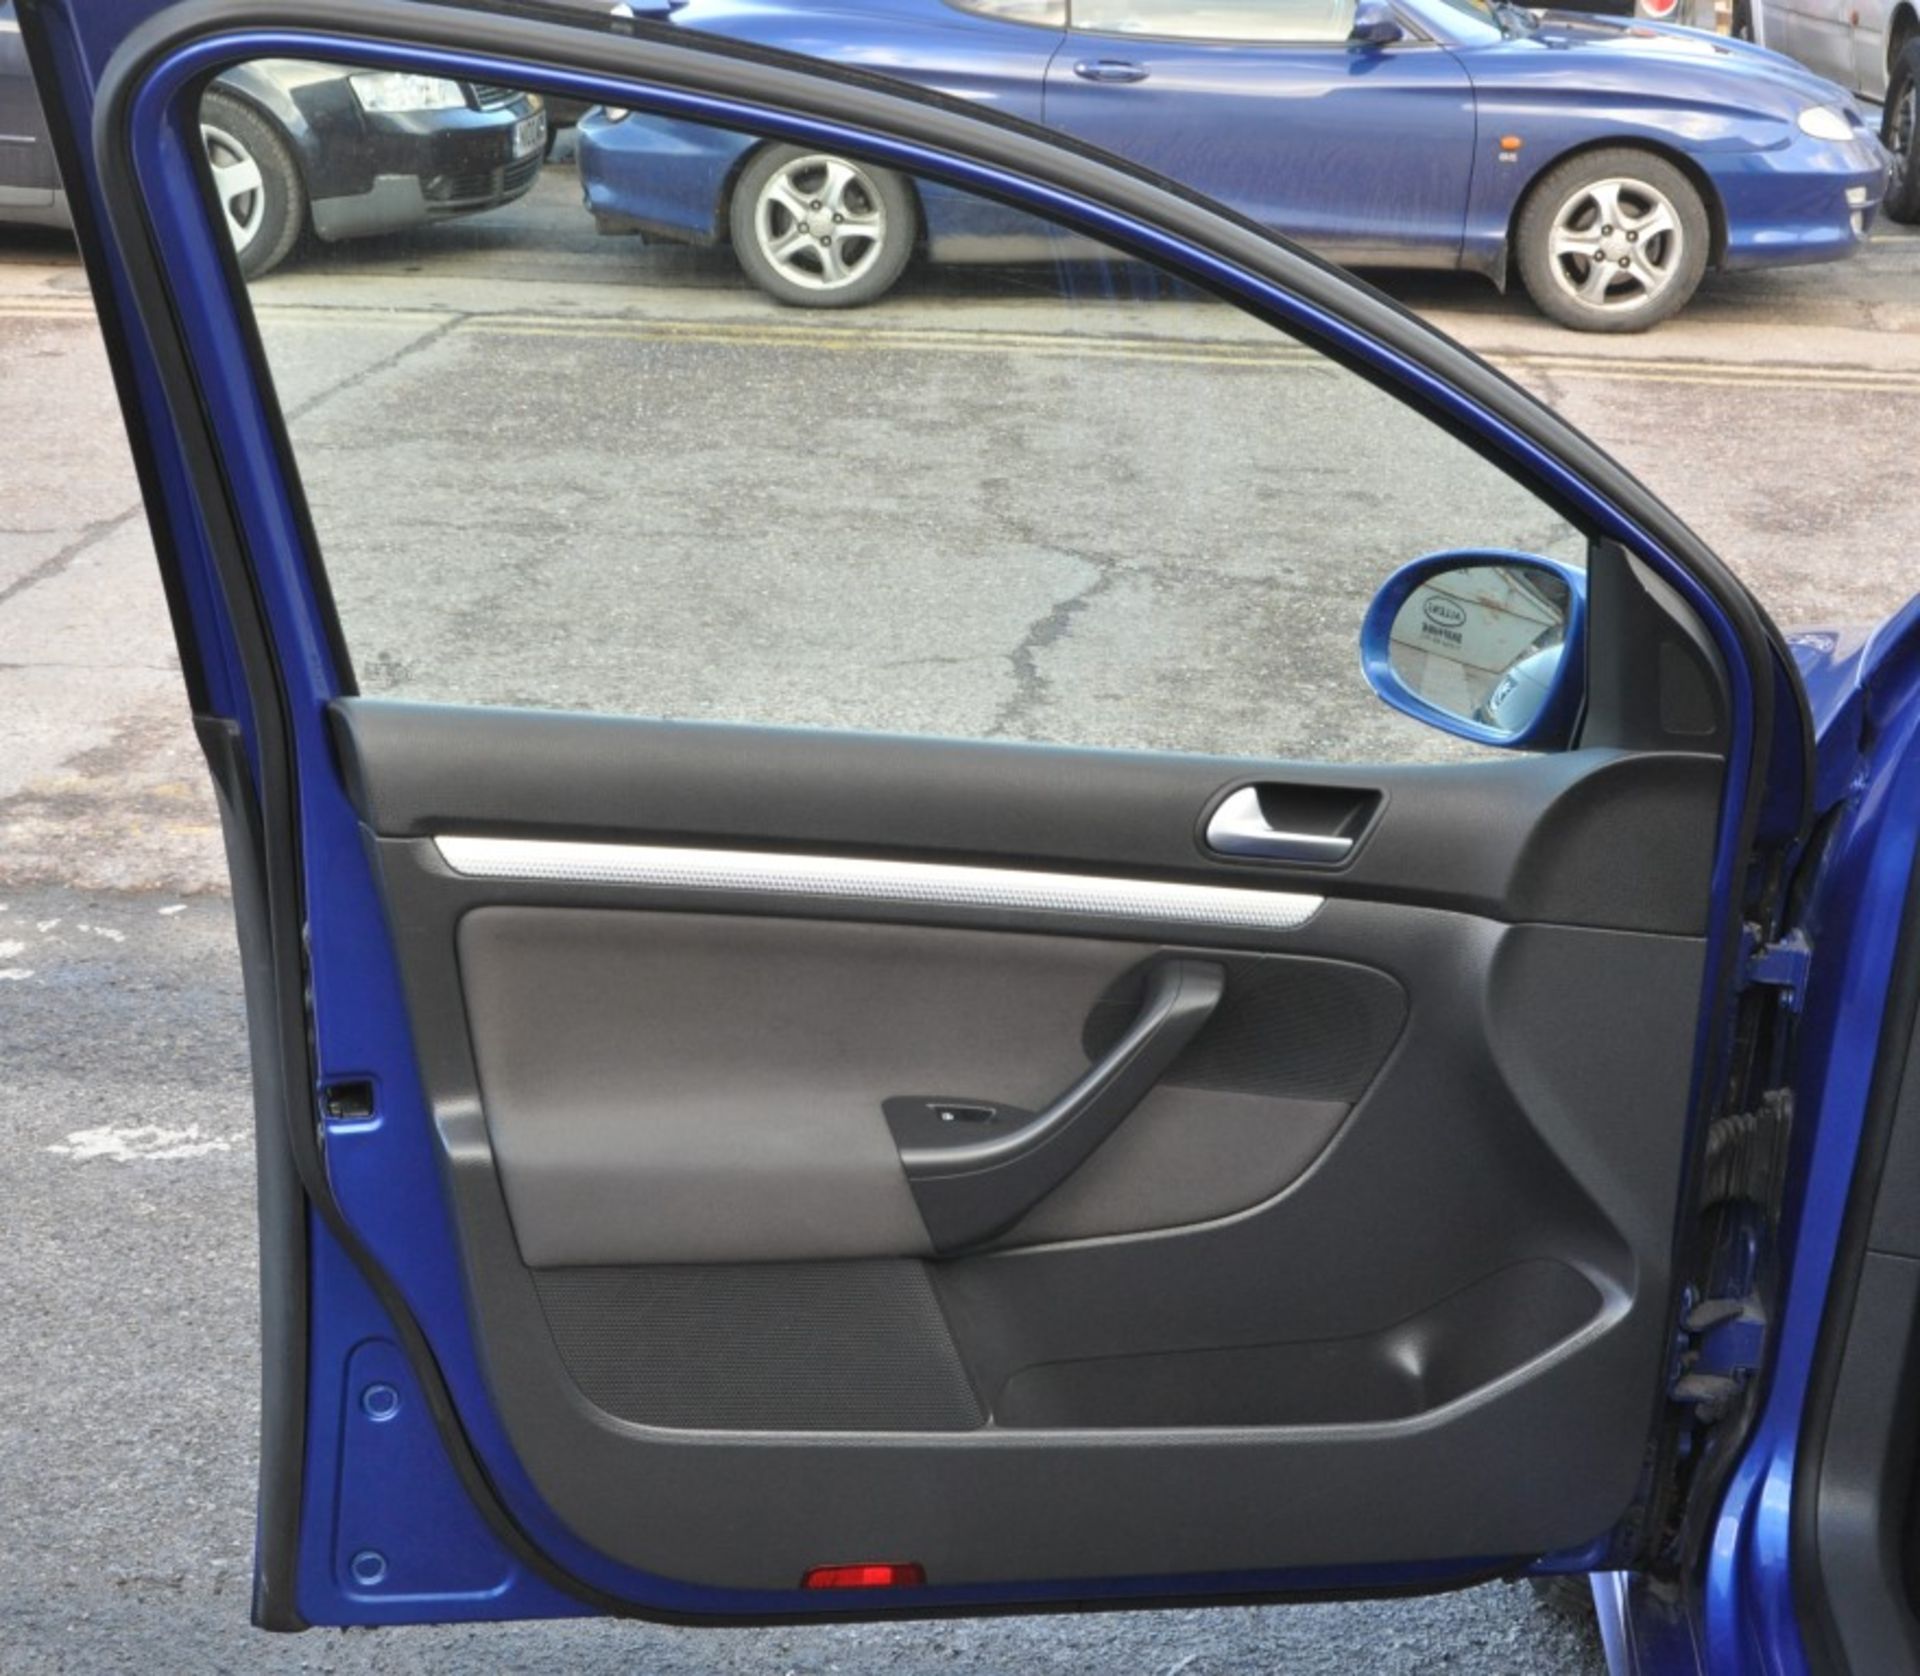 1 x Volkswagon Golf R32 V6 "5 Door" 2008, Blue - Heated Seats, 42,733 Miles - MOT Jan 2016 - Image 8 of 25